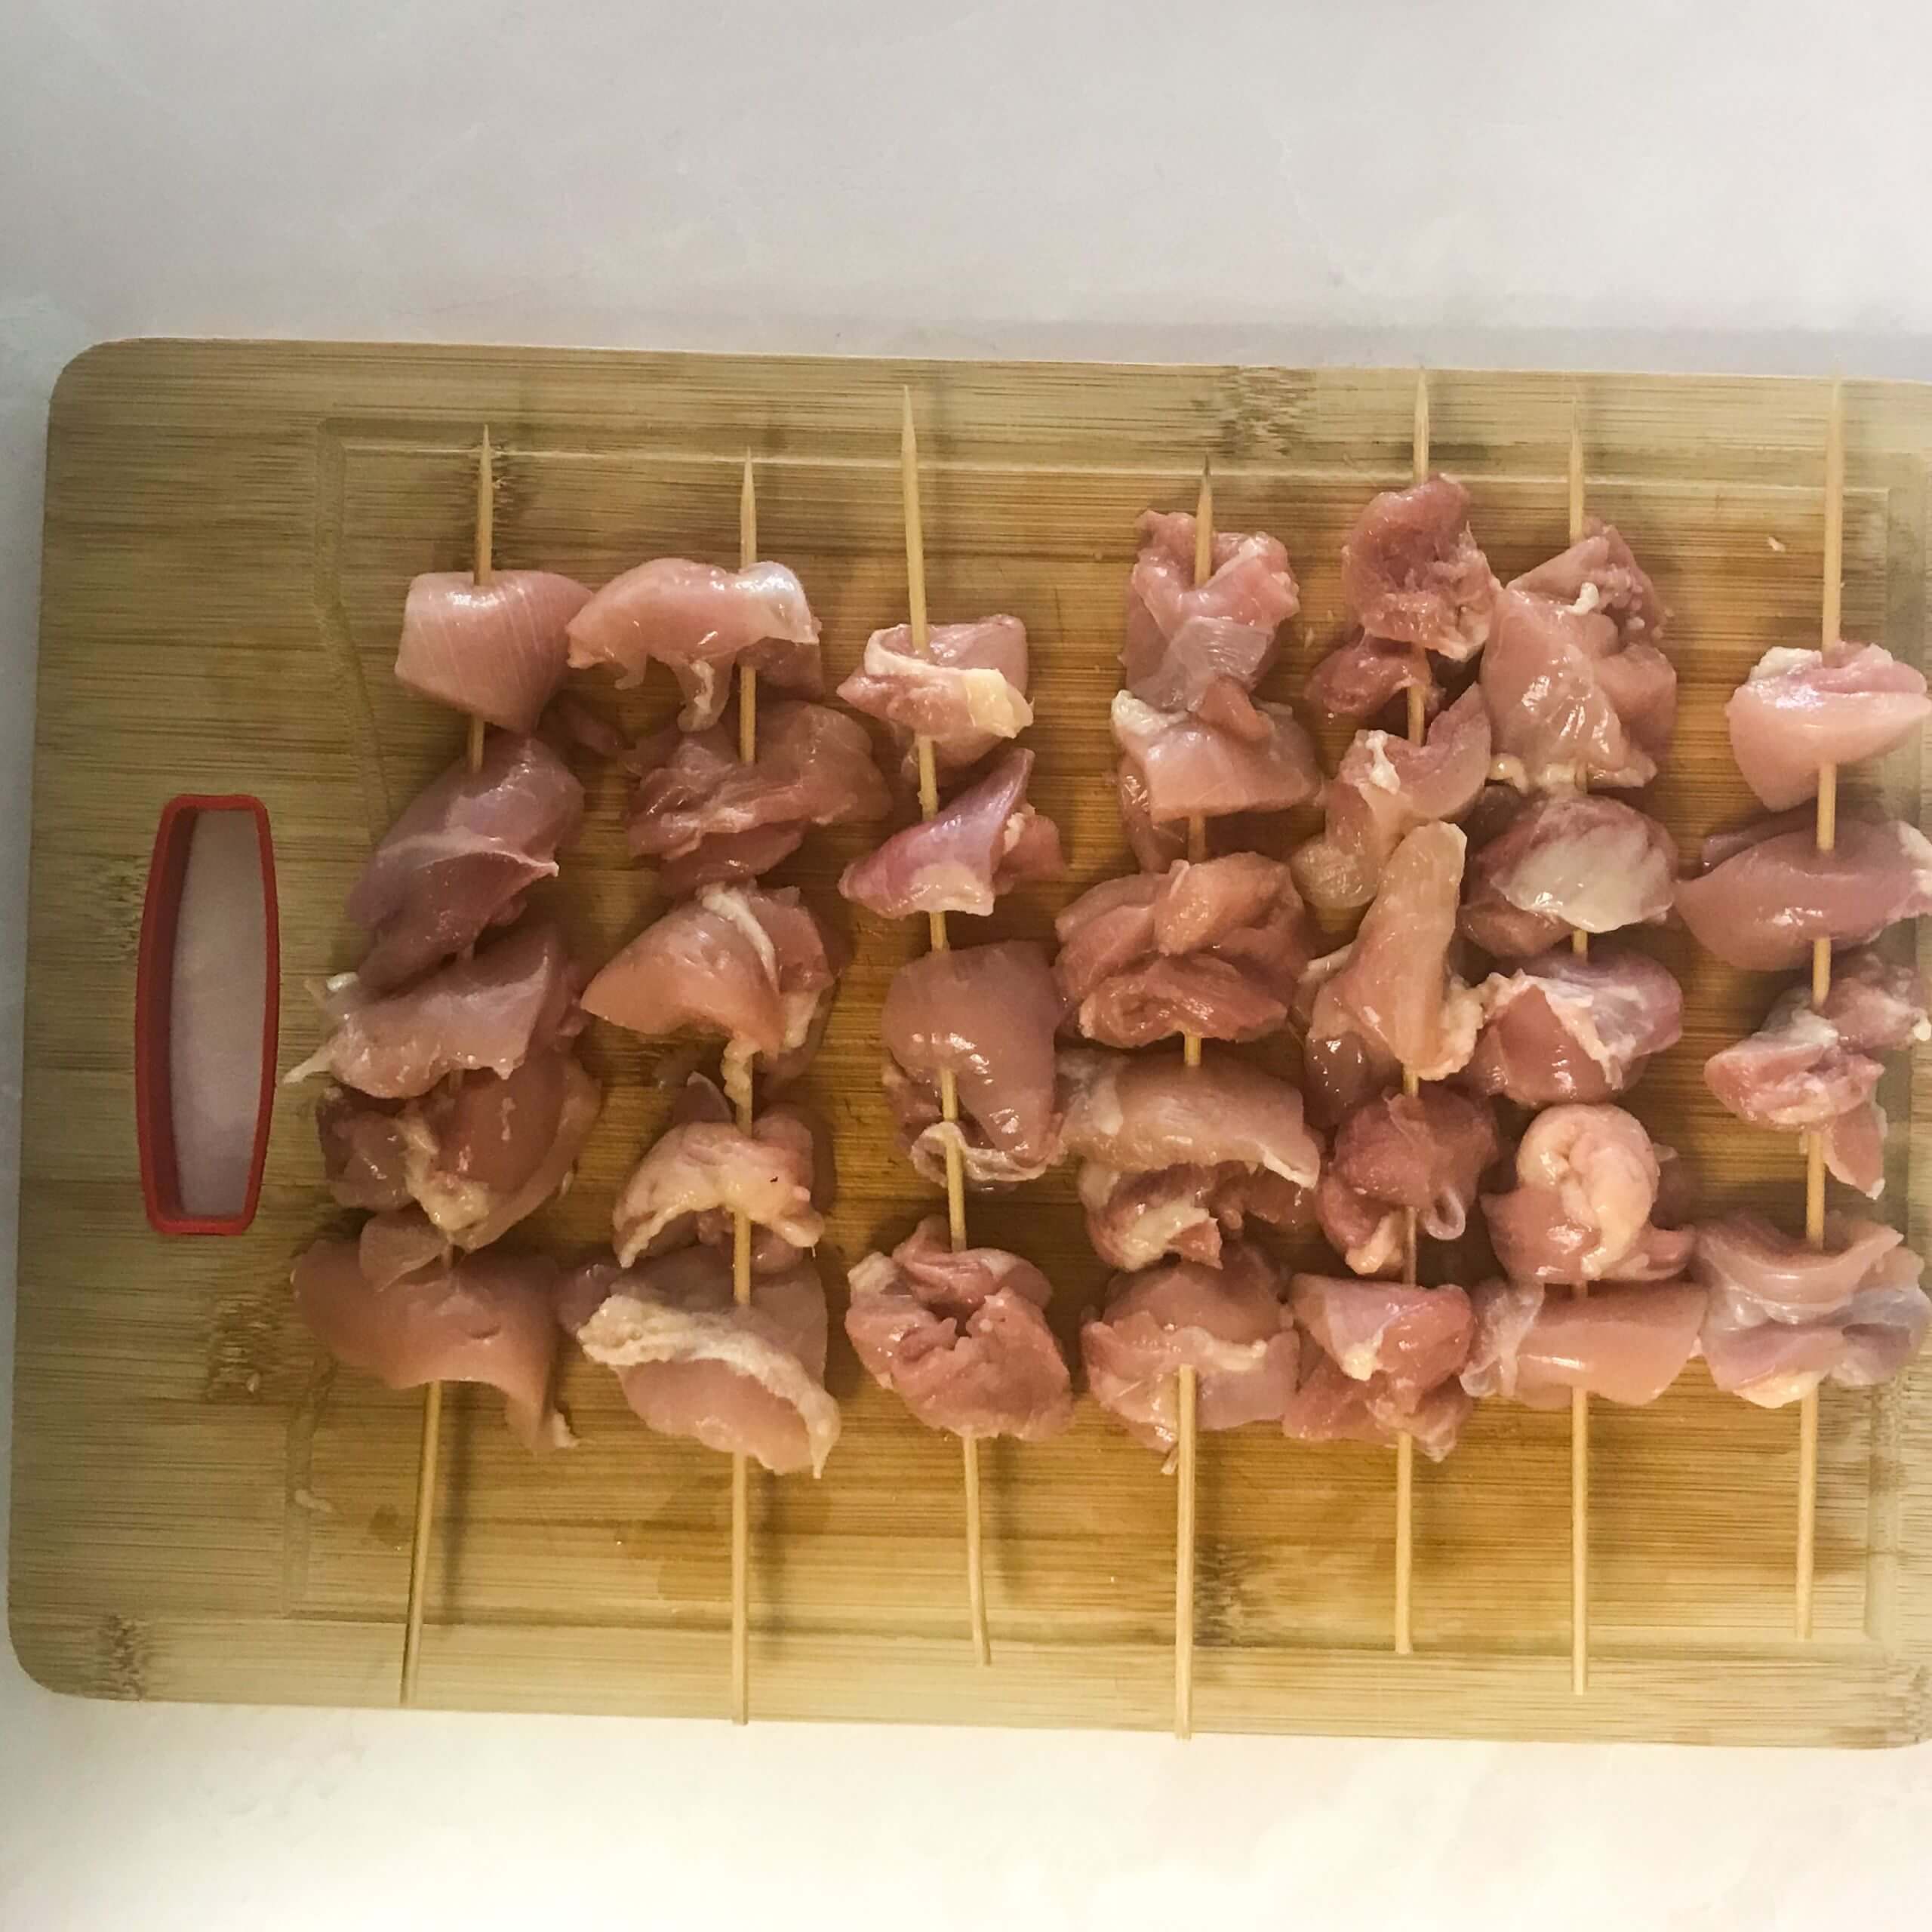 raw chicken skewers on cutting board